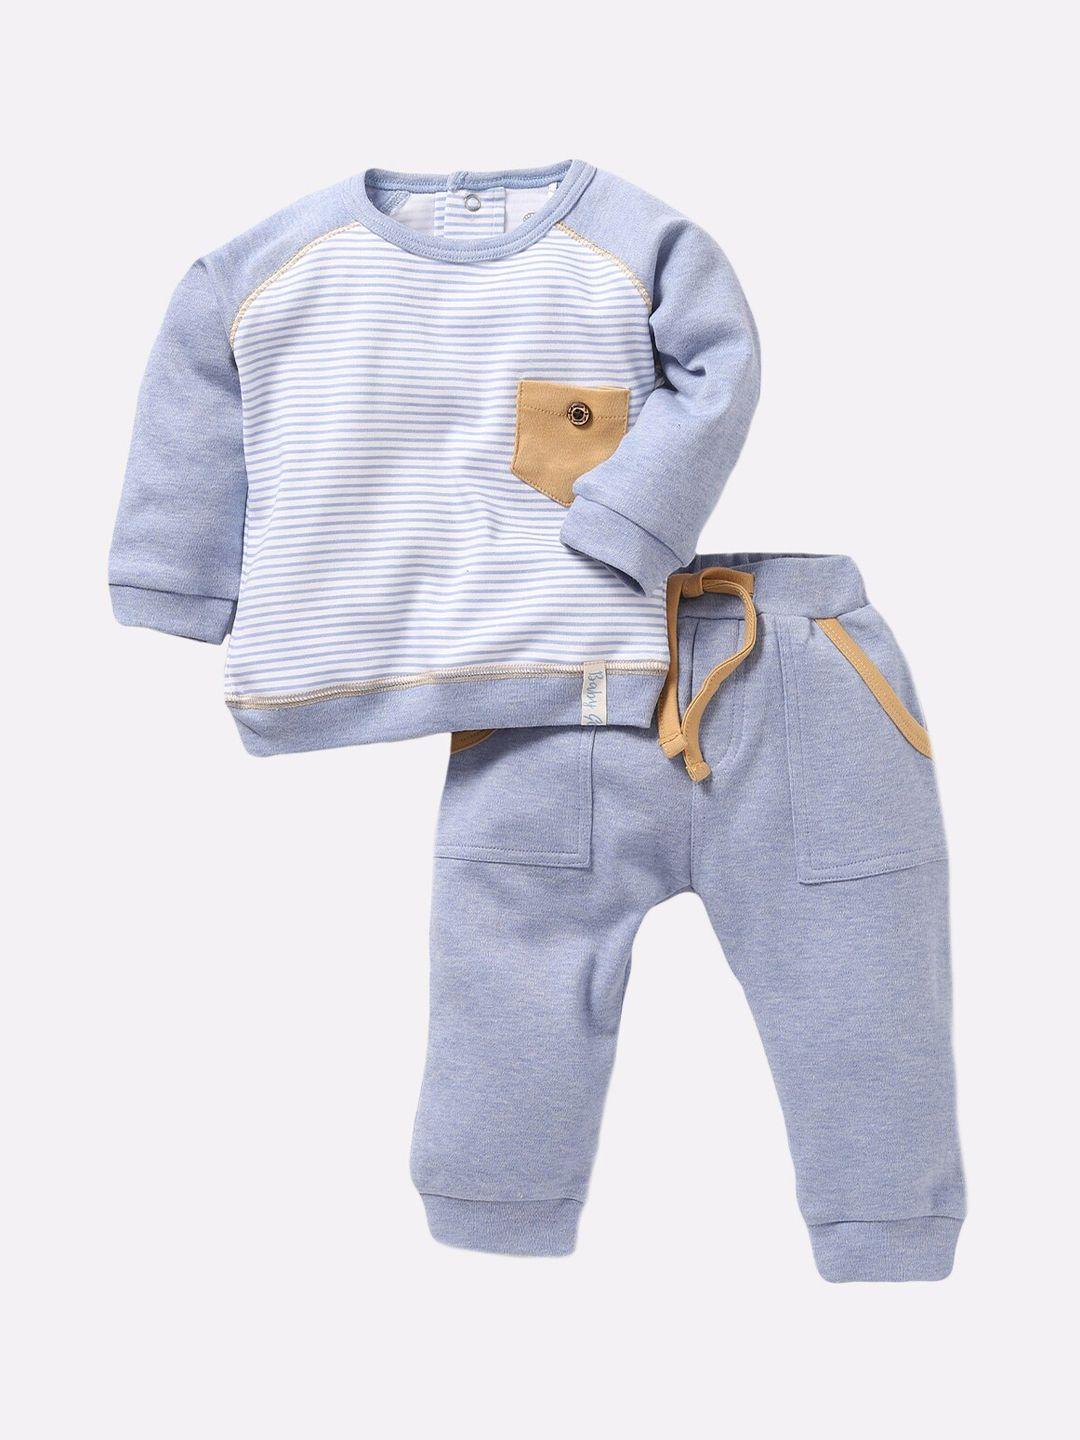 baby-go-boys-blue-&-white-printed-clothing-set